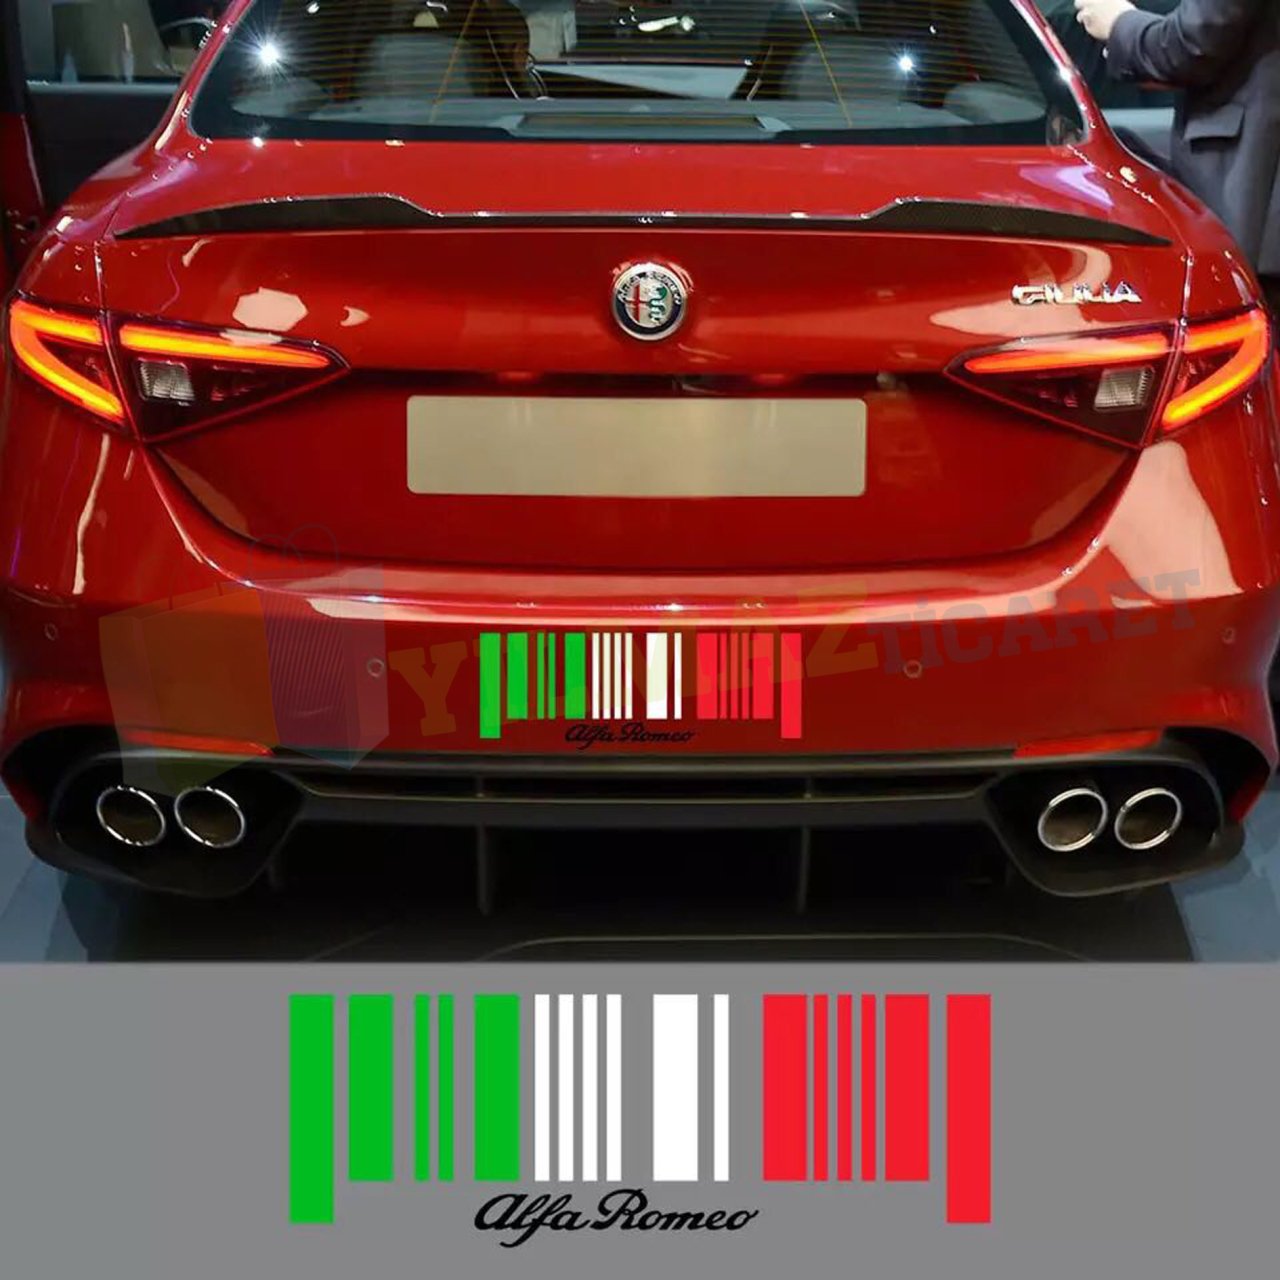 Alfa Romeo Cam Tampon Giulietta 159 156 Oto Sticker Yapıştırma